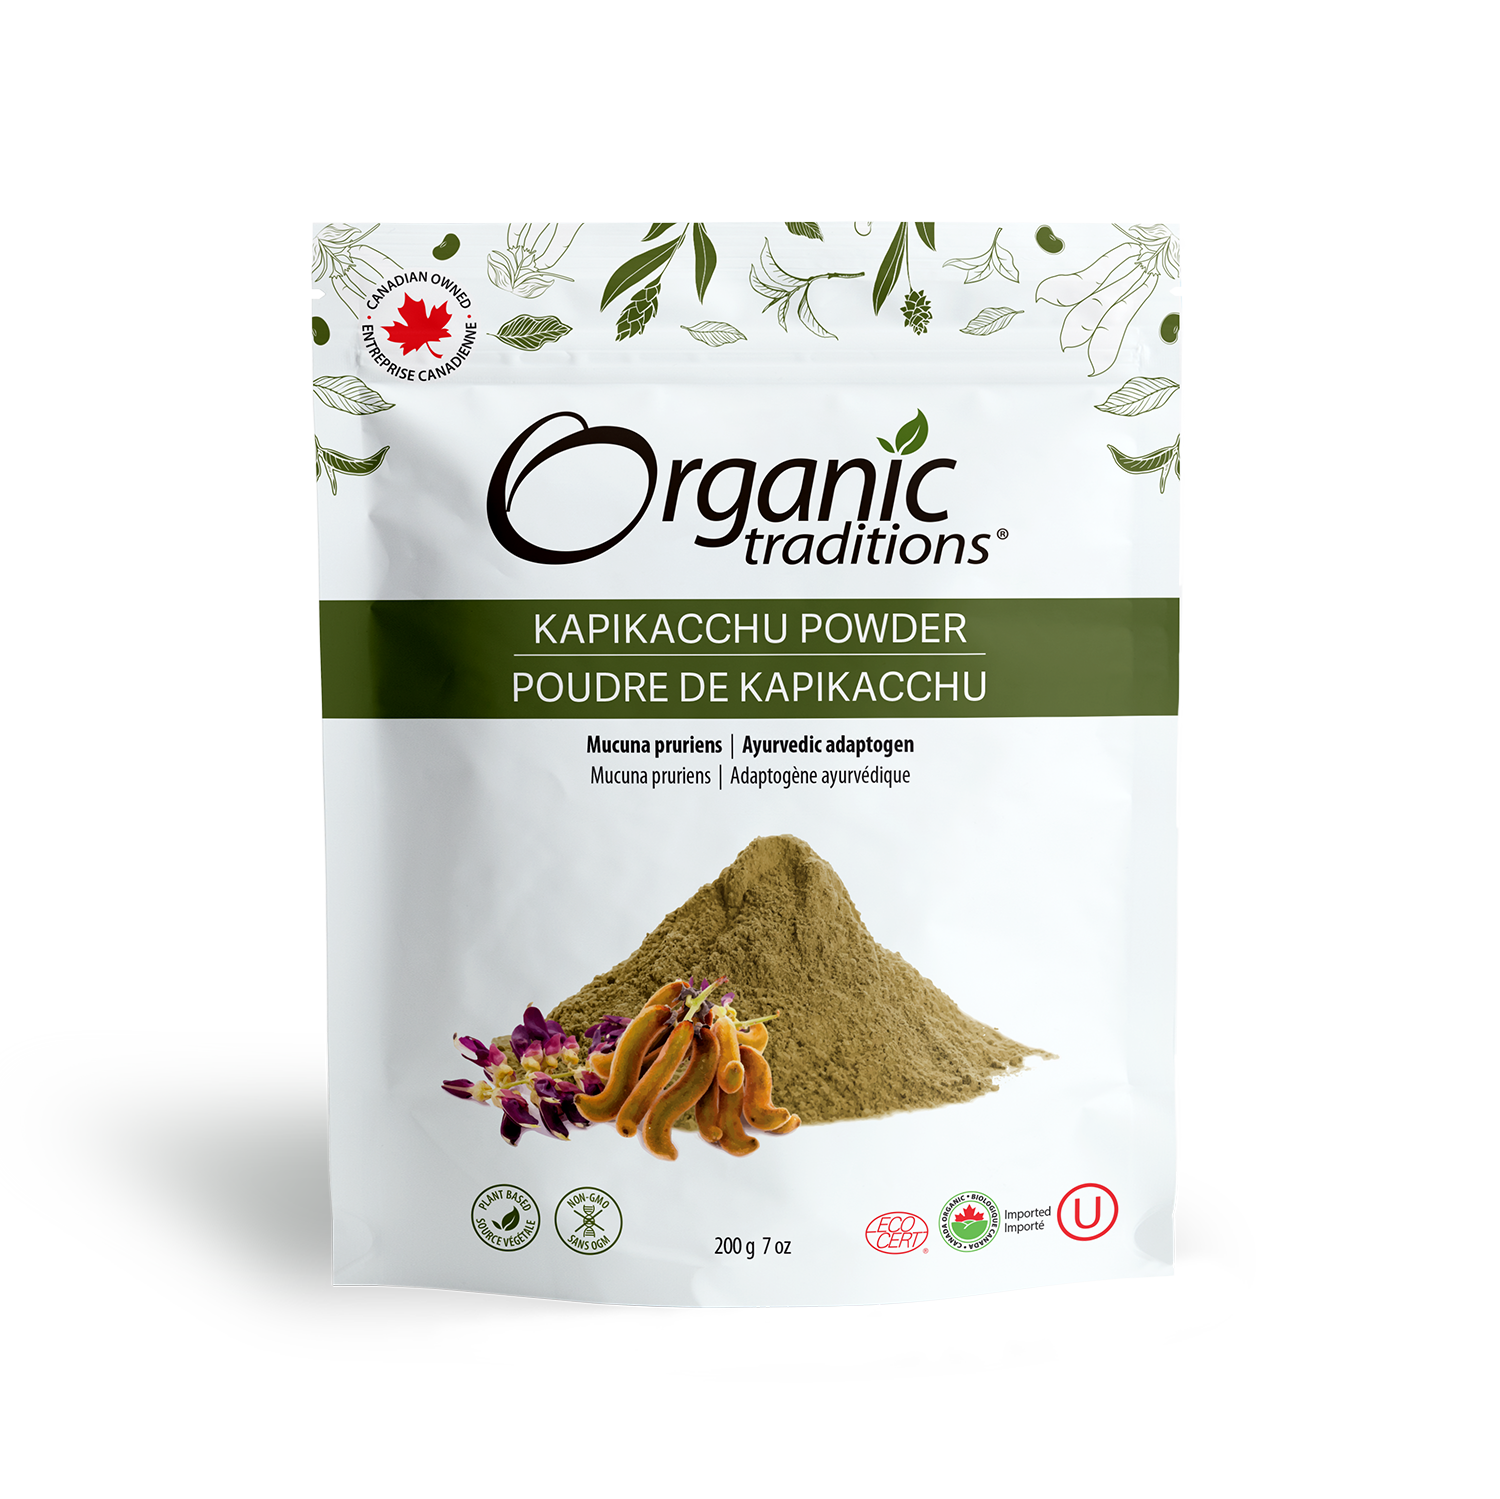 organic traditions kapikacchu powder front of bag image